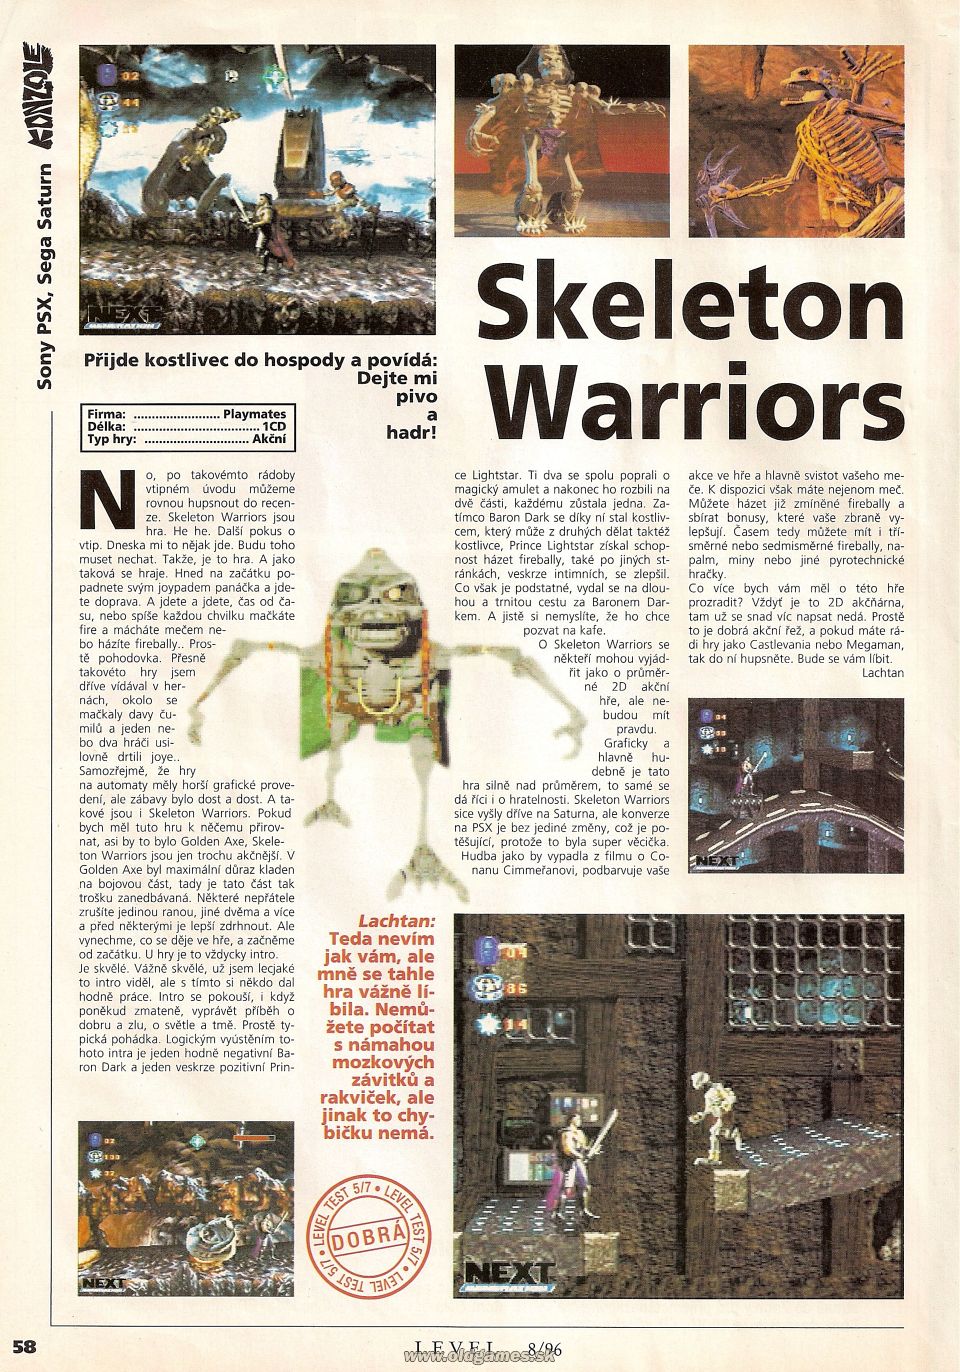 Skeleton Warriors - PSX